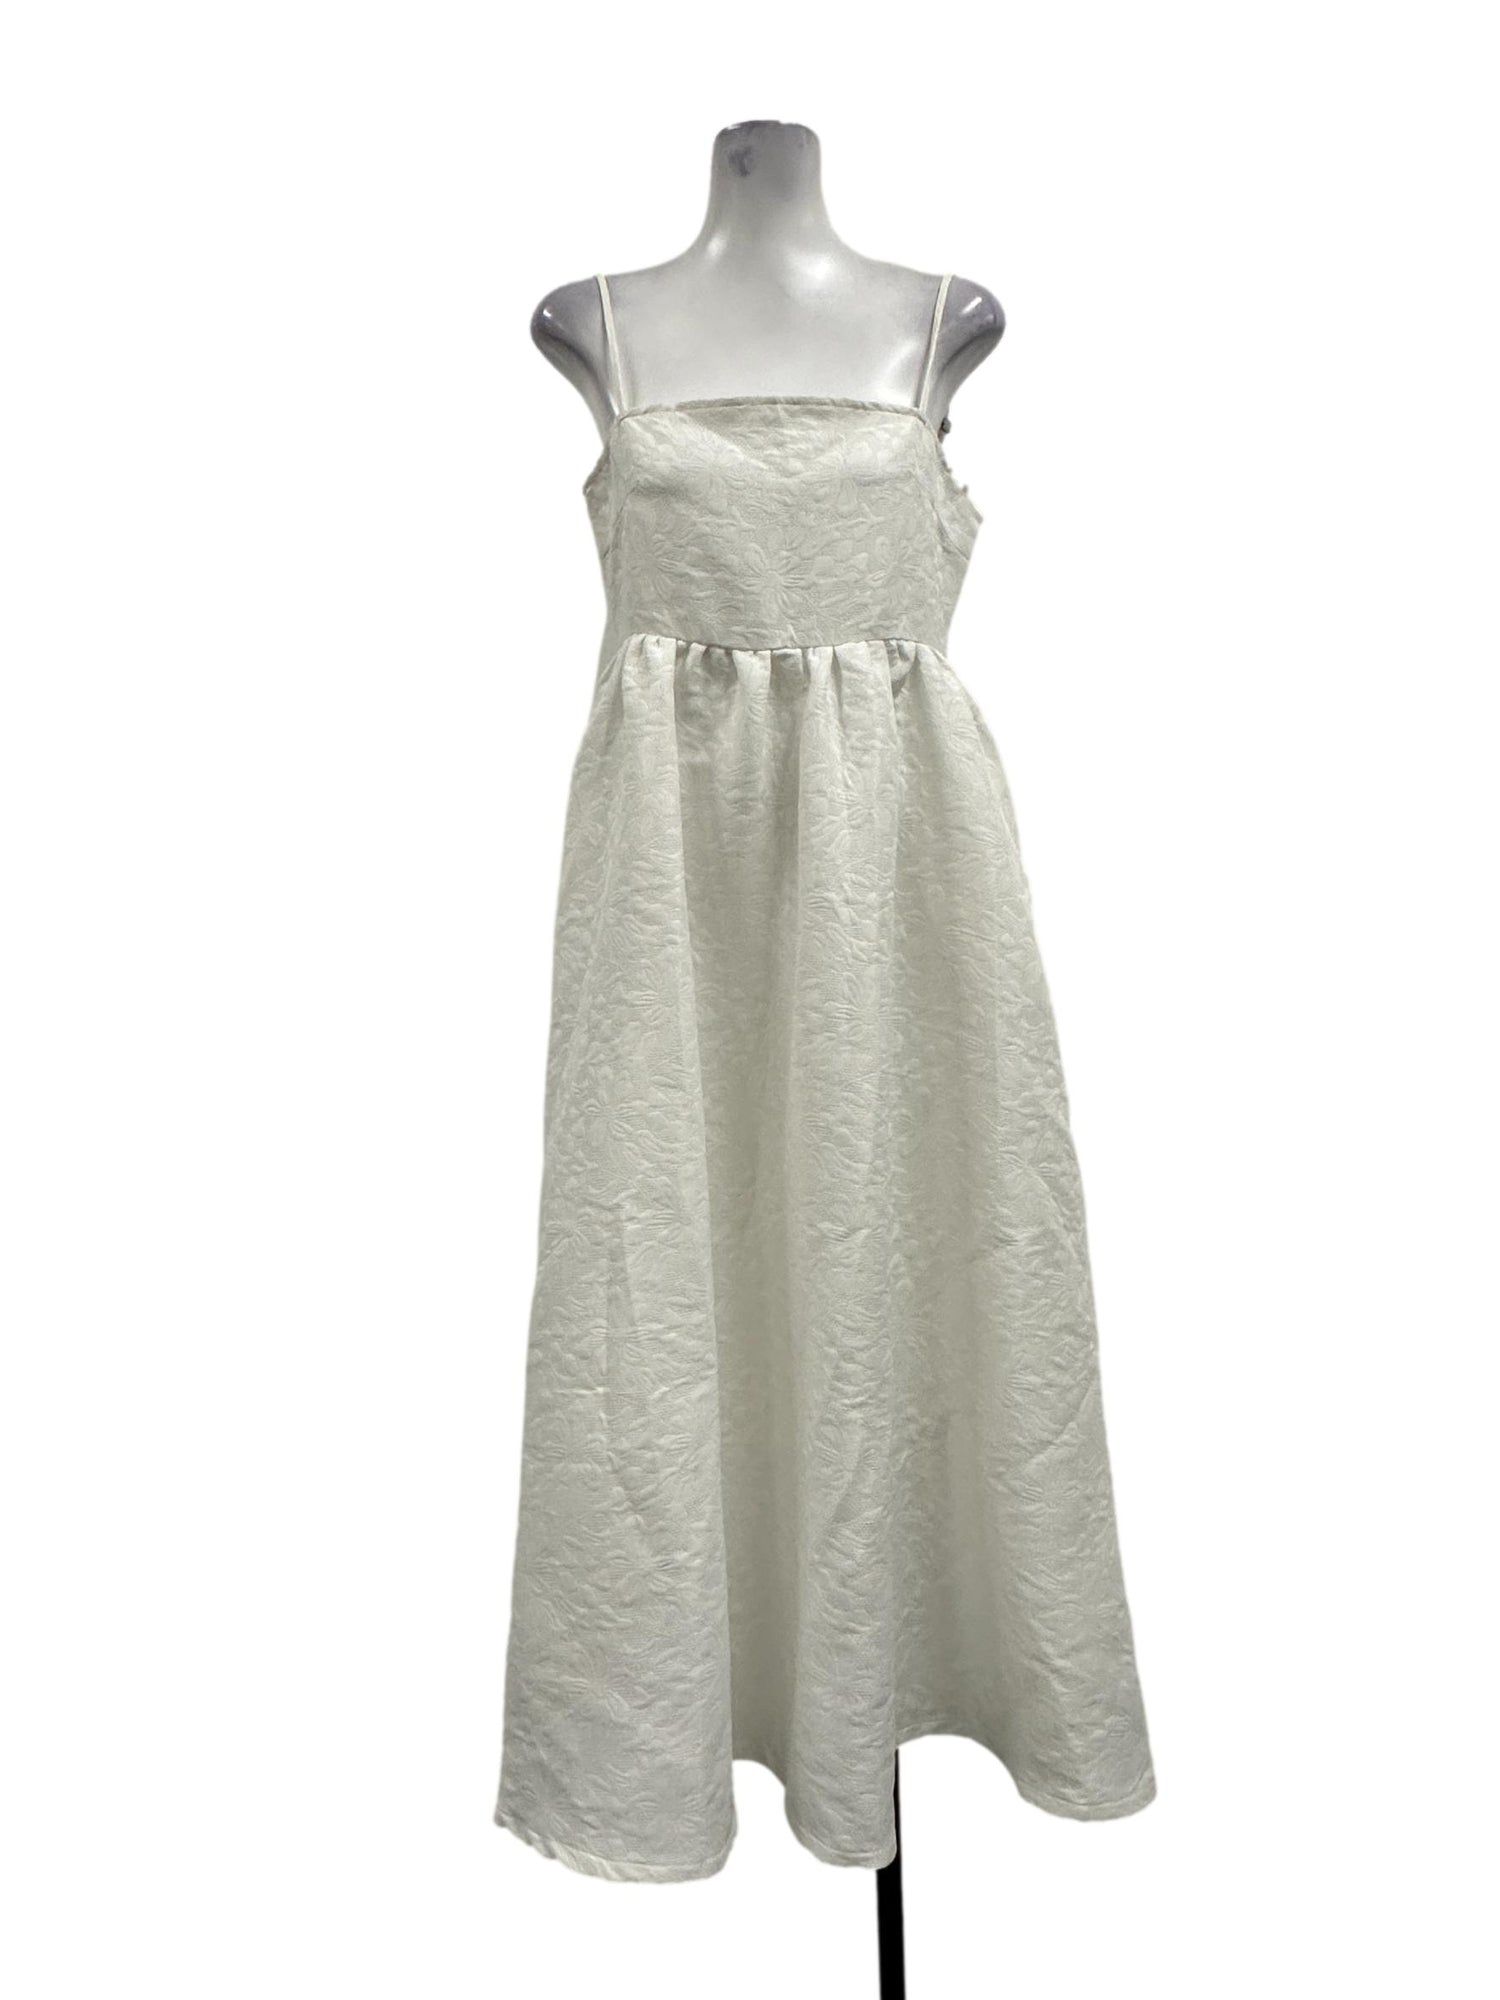 Alecia Classic A-line Dress